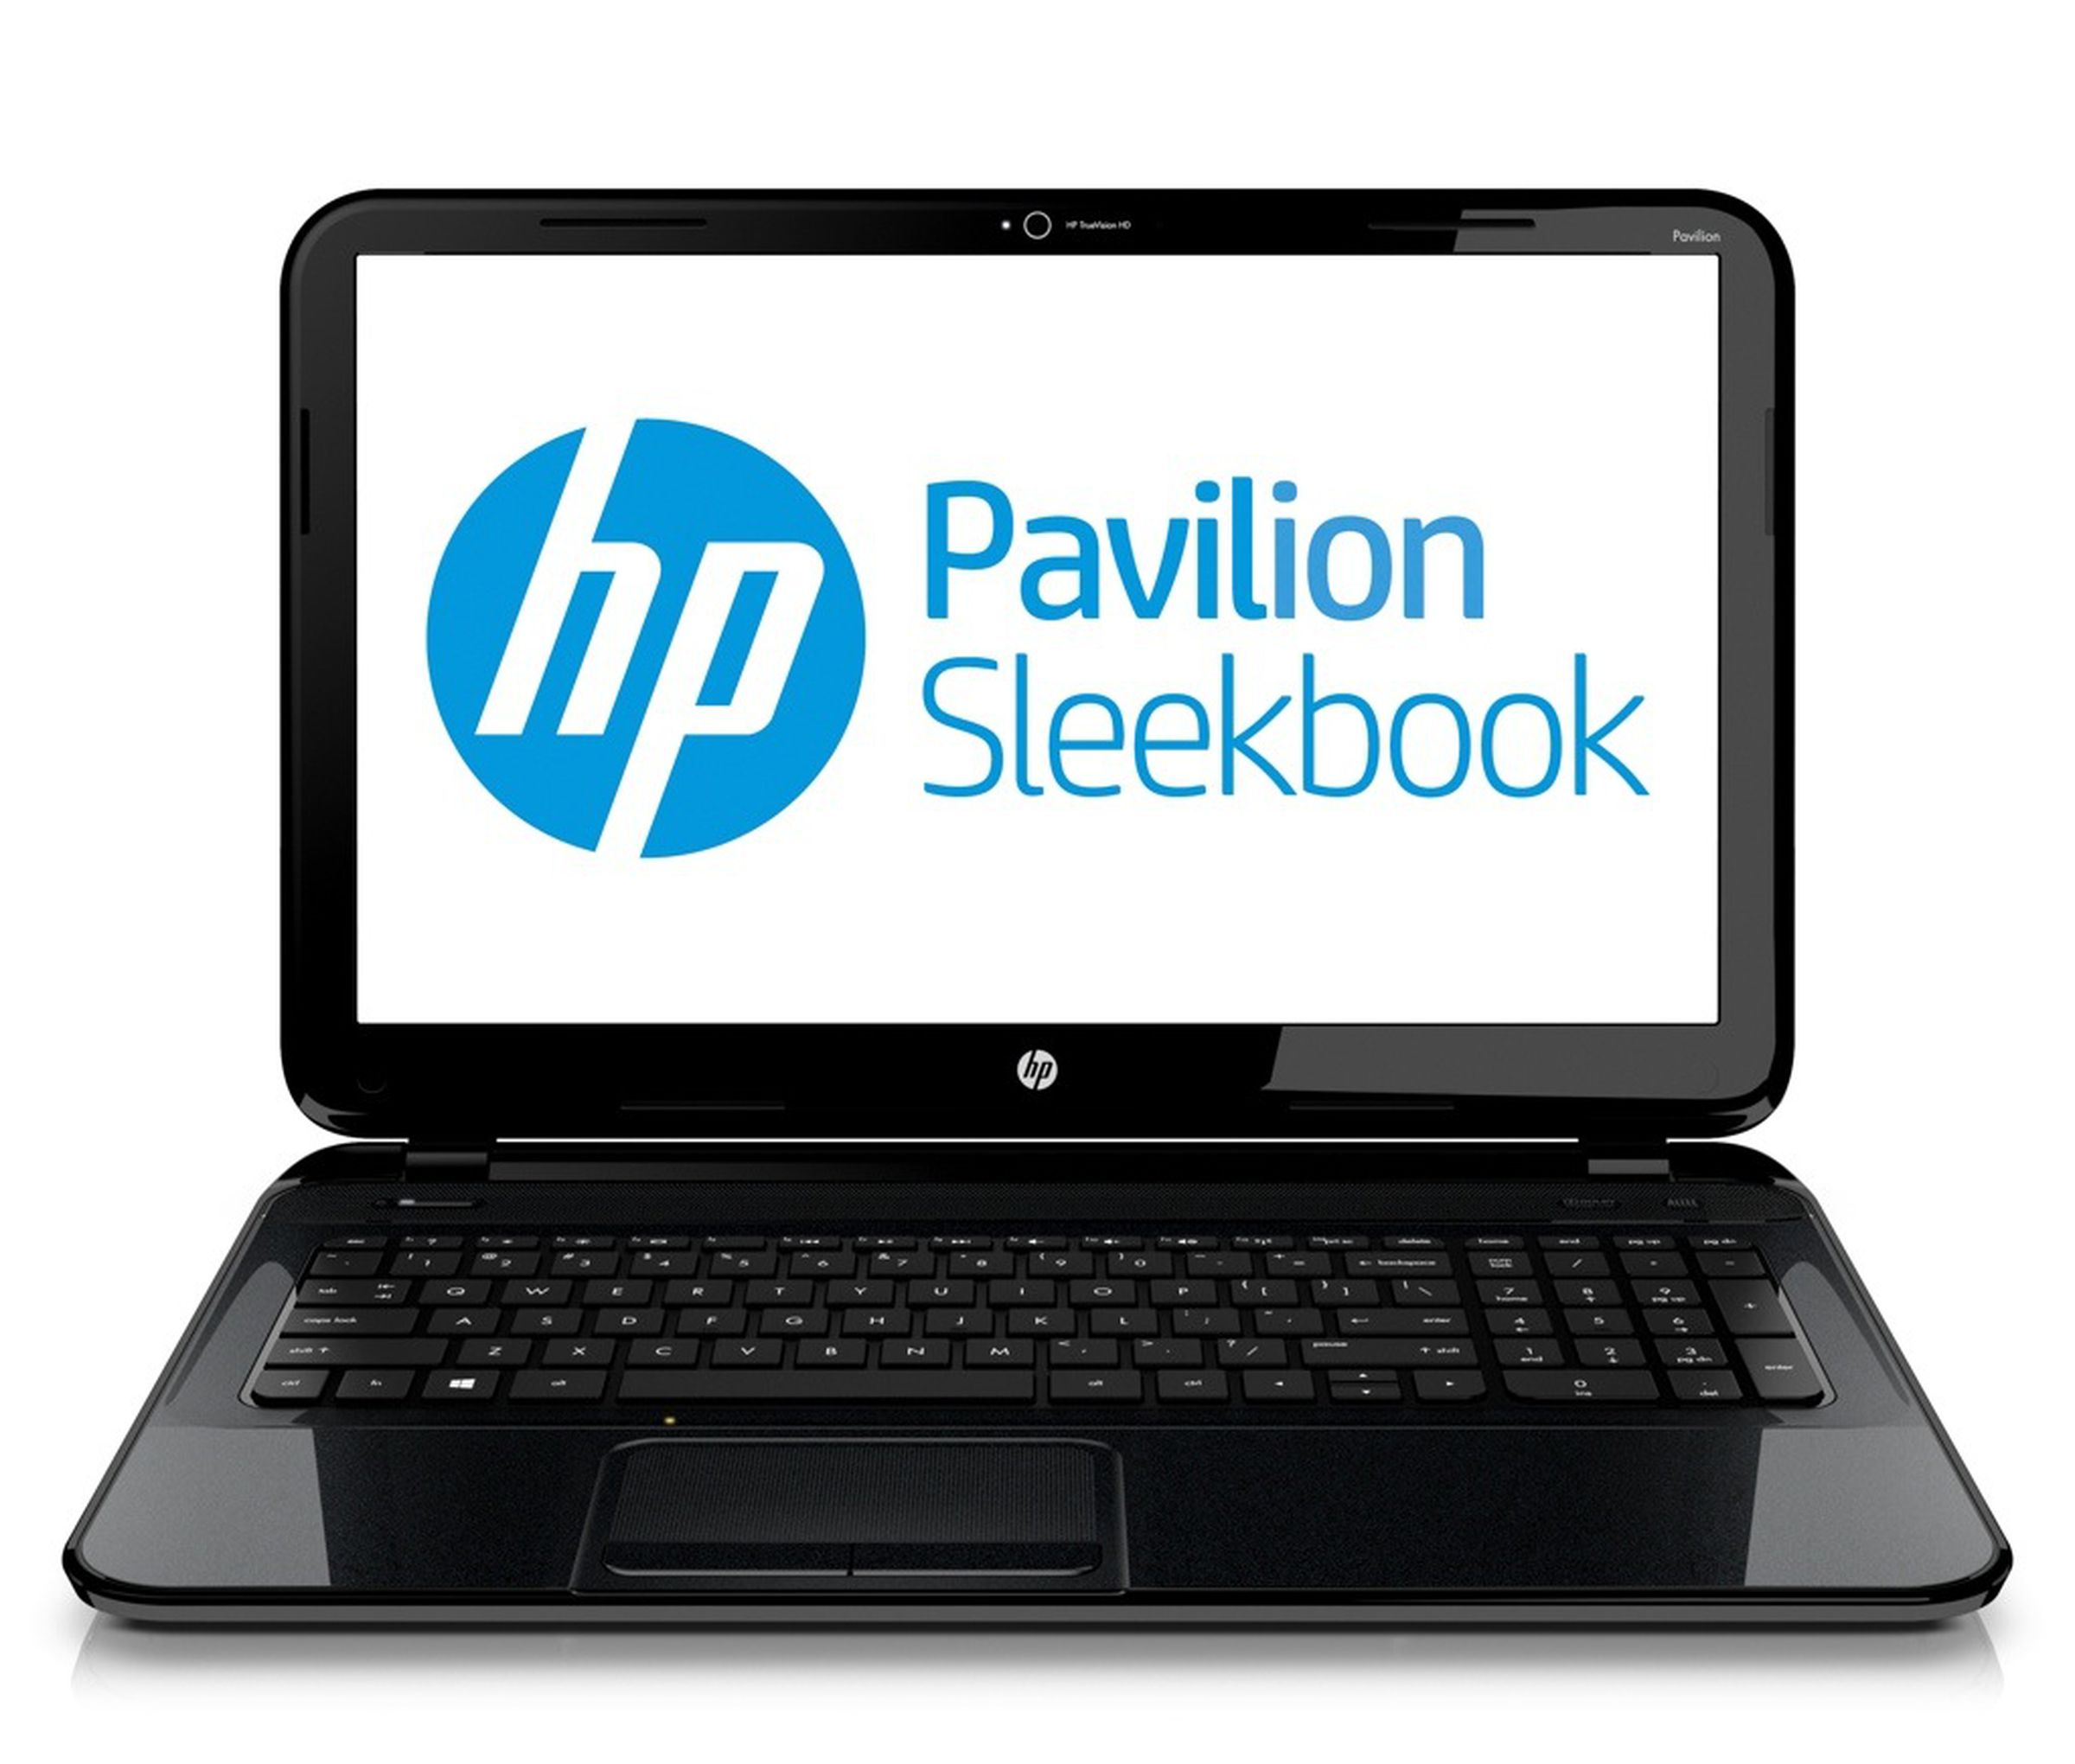 HP Pavilion Sleekbook 14 and Pavilion Sleekbook 15 official photos